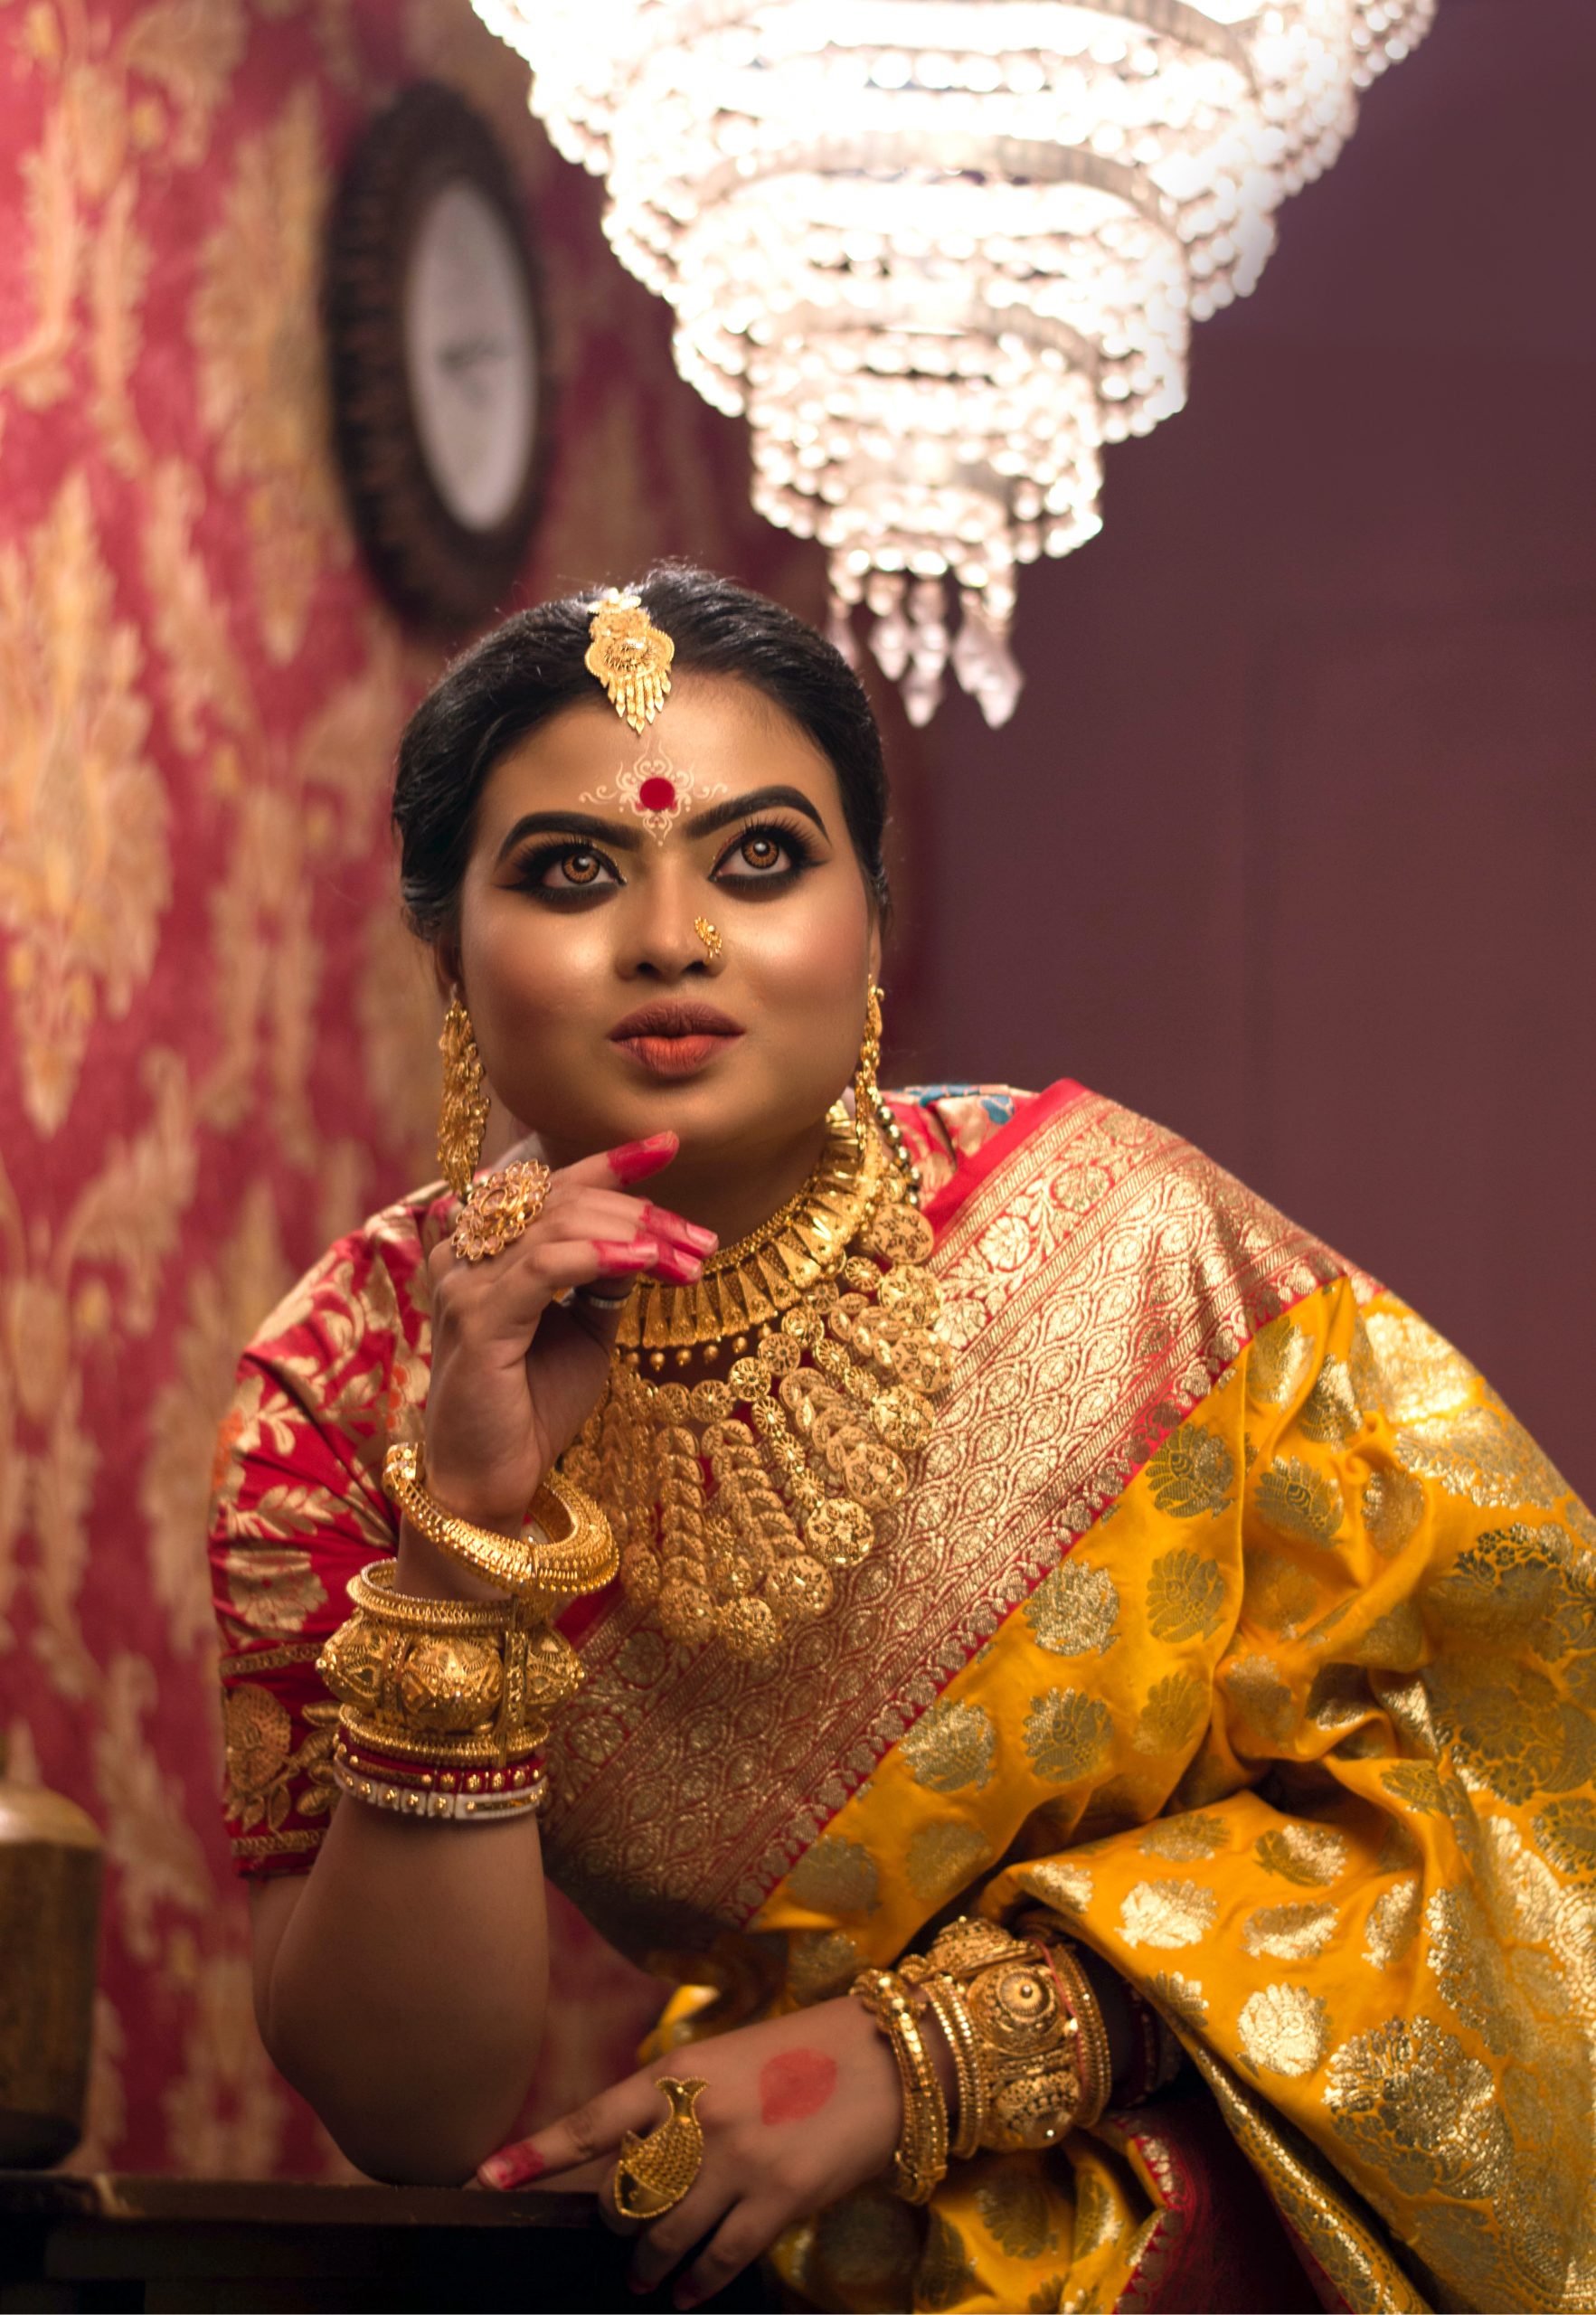 A Bengali bride